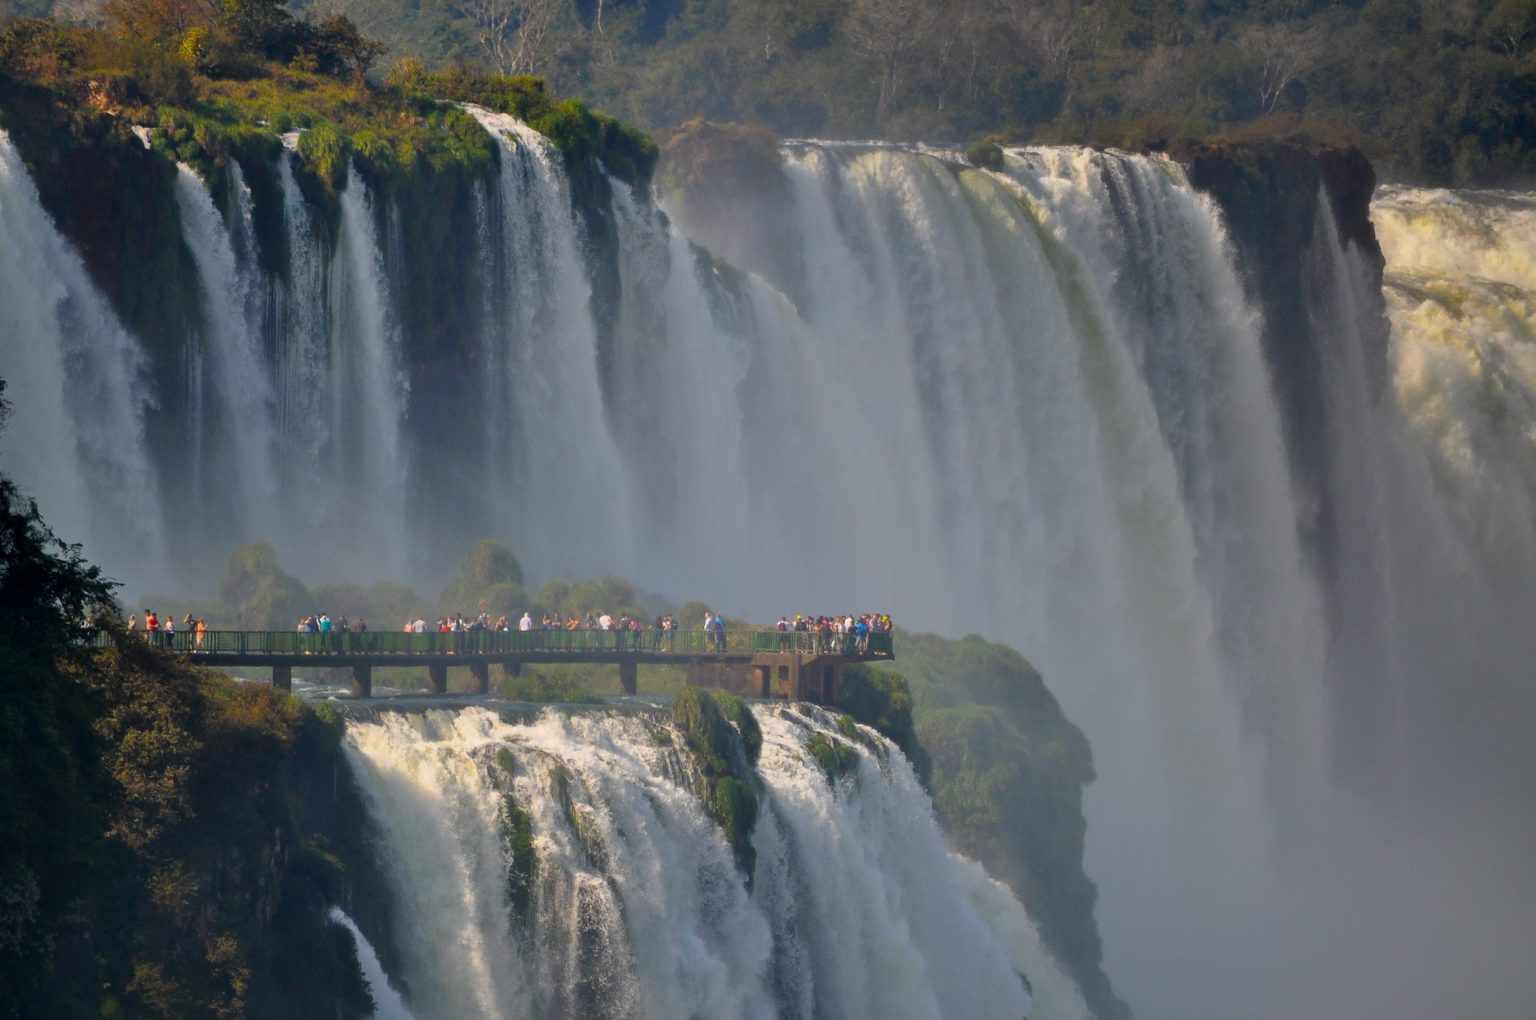 The Breathtaking Sights Of Iguazu Falls